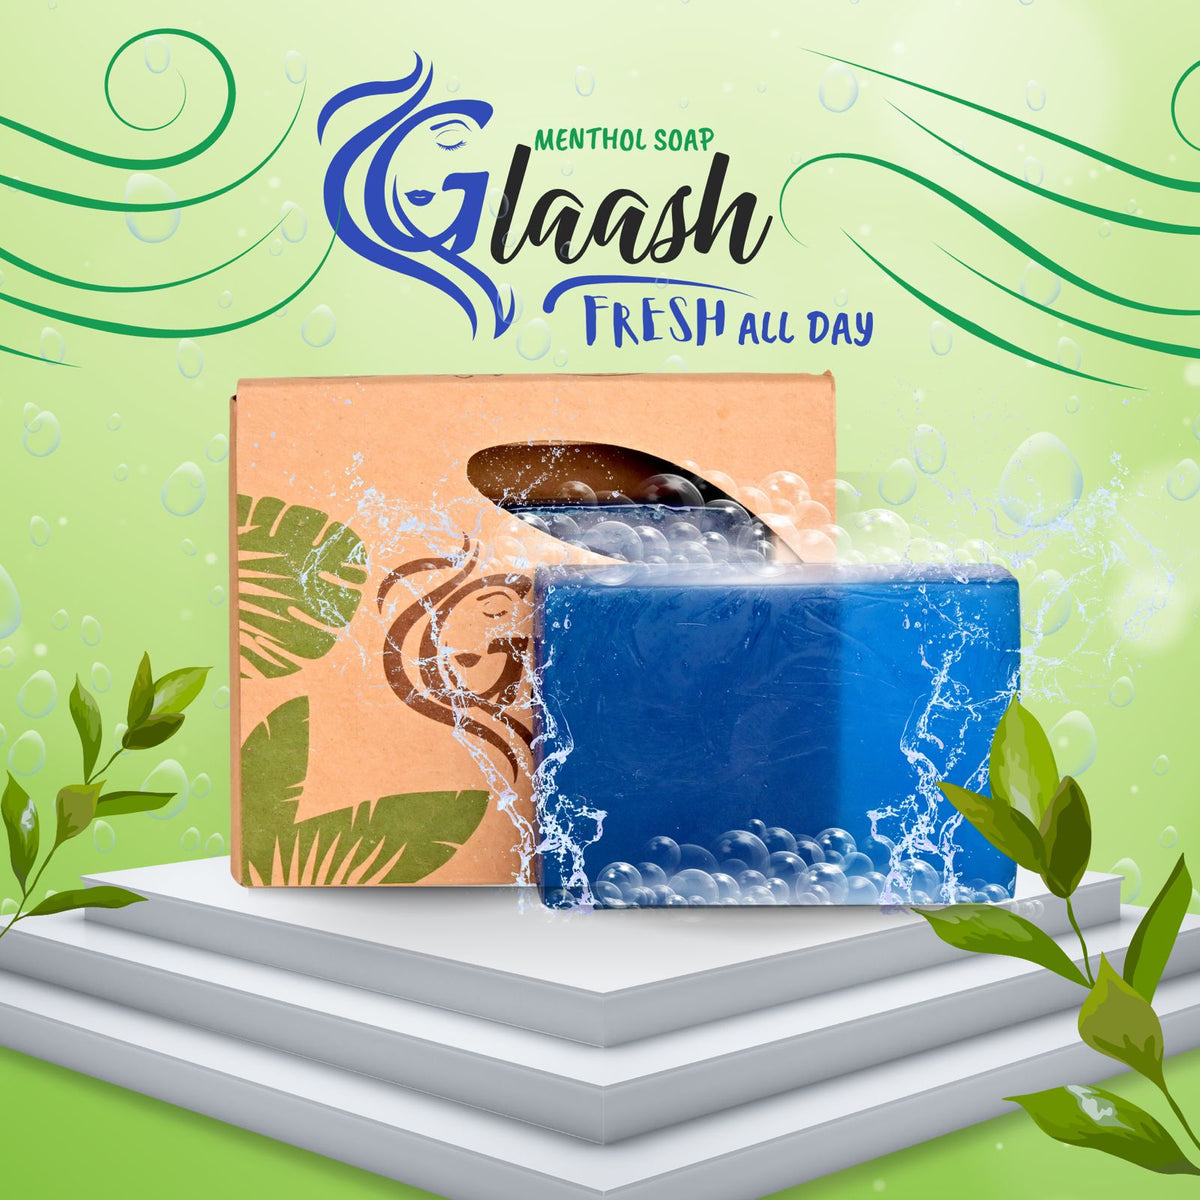 Glaash Pack of 03 Tint + Soap + Toner | Plum Fatale Tint + Menthol Organic Soap + Tea Tree Toner